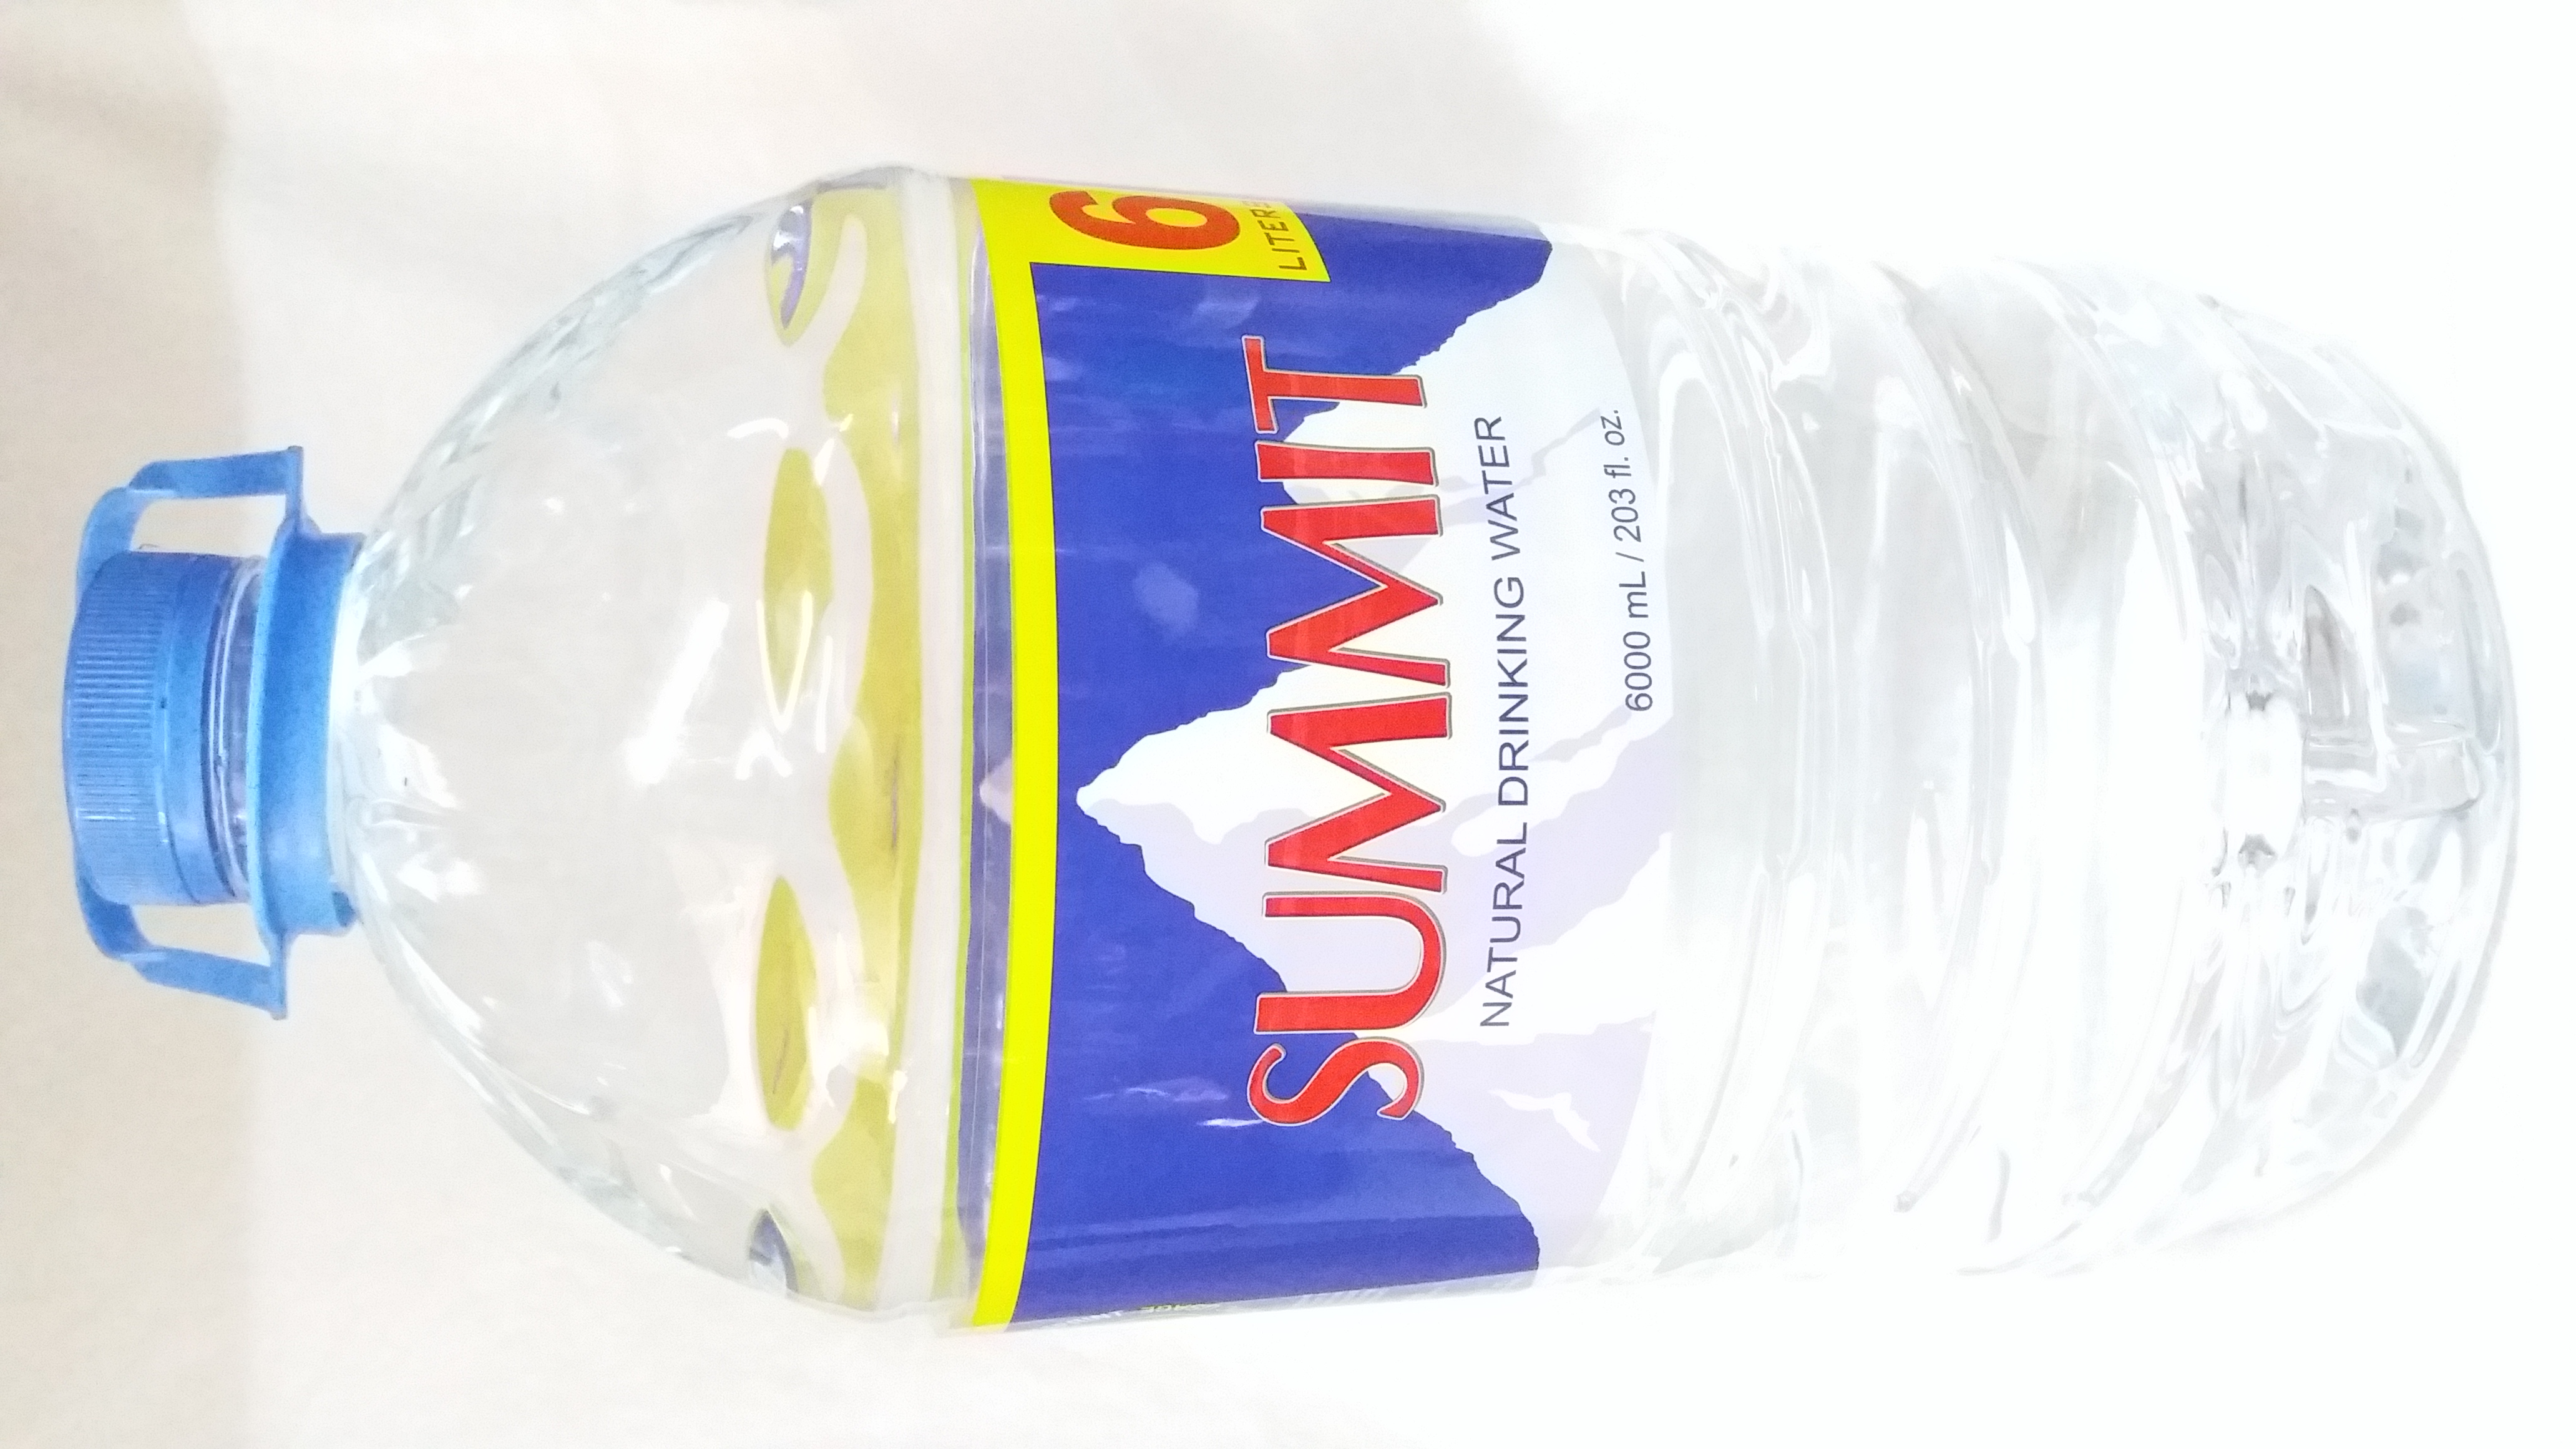 Distilled Bottled Water Brands Philippines - Best Pictures ...